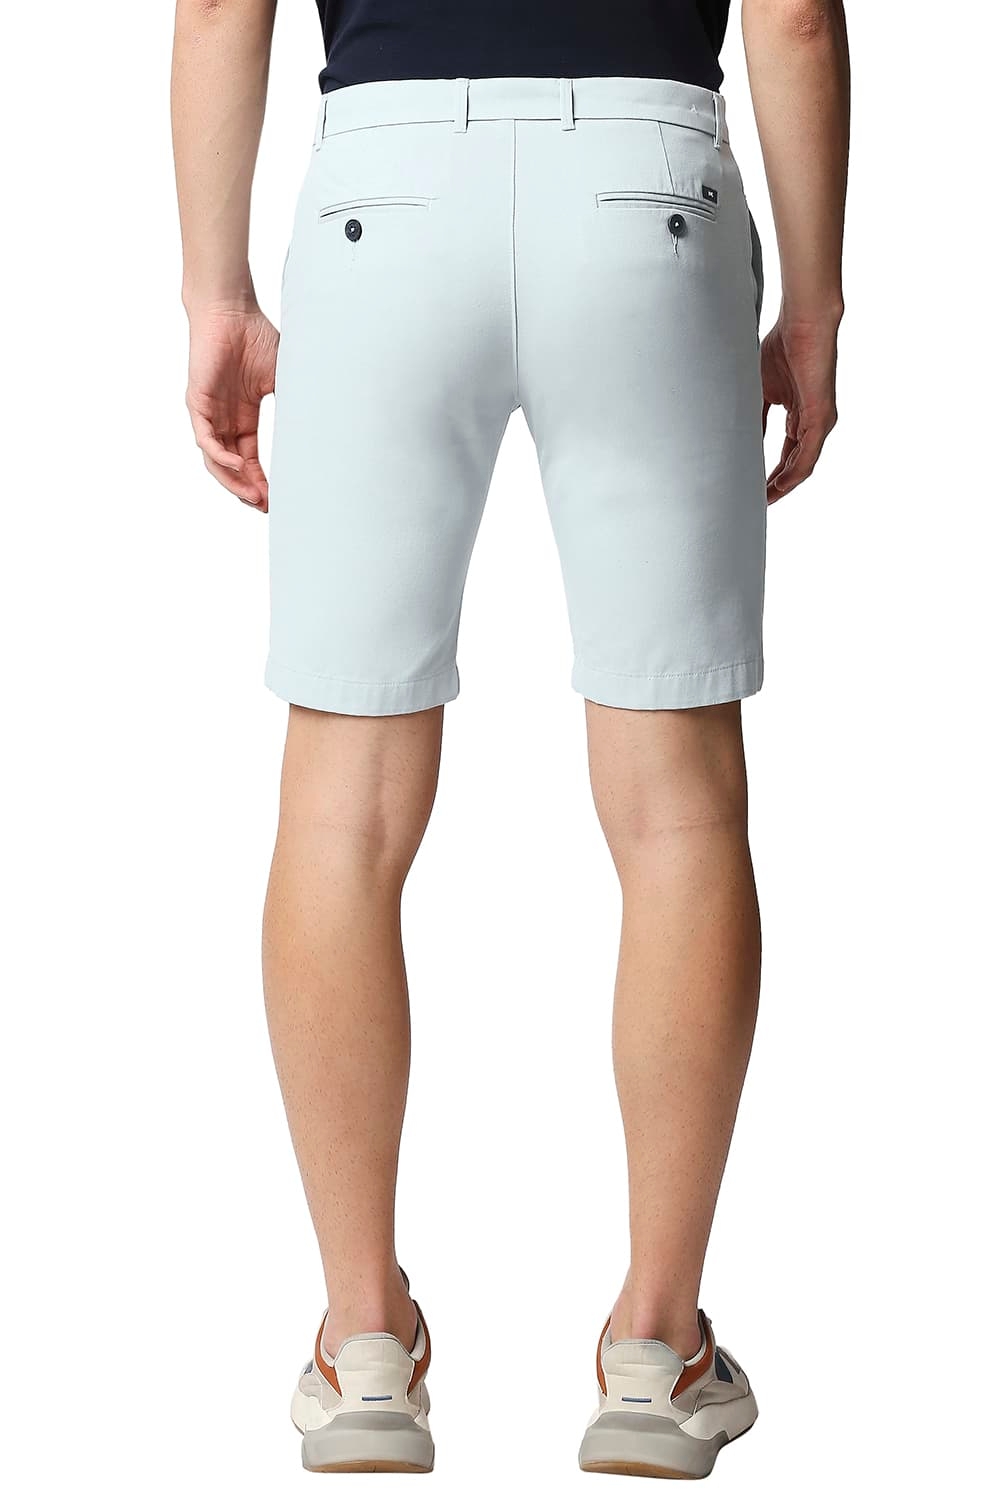 Basics | Men's Light Blue Cotton Solid Shorts 1